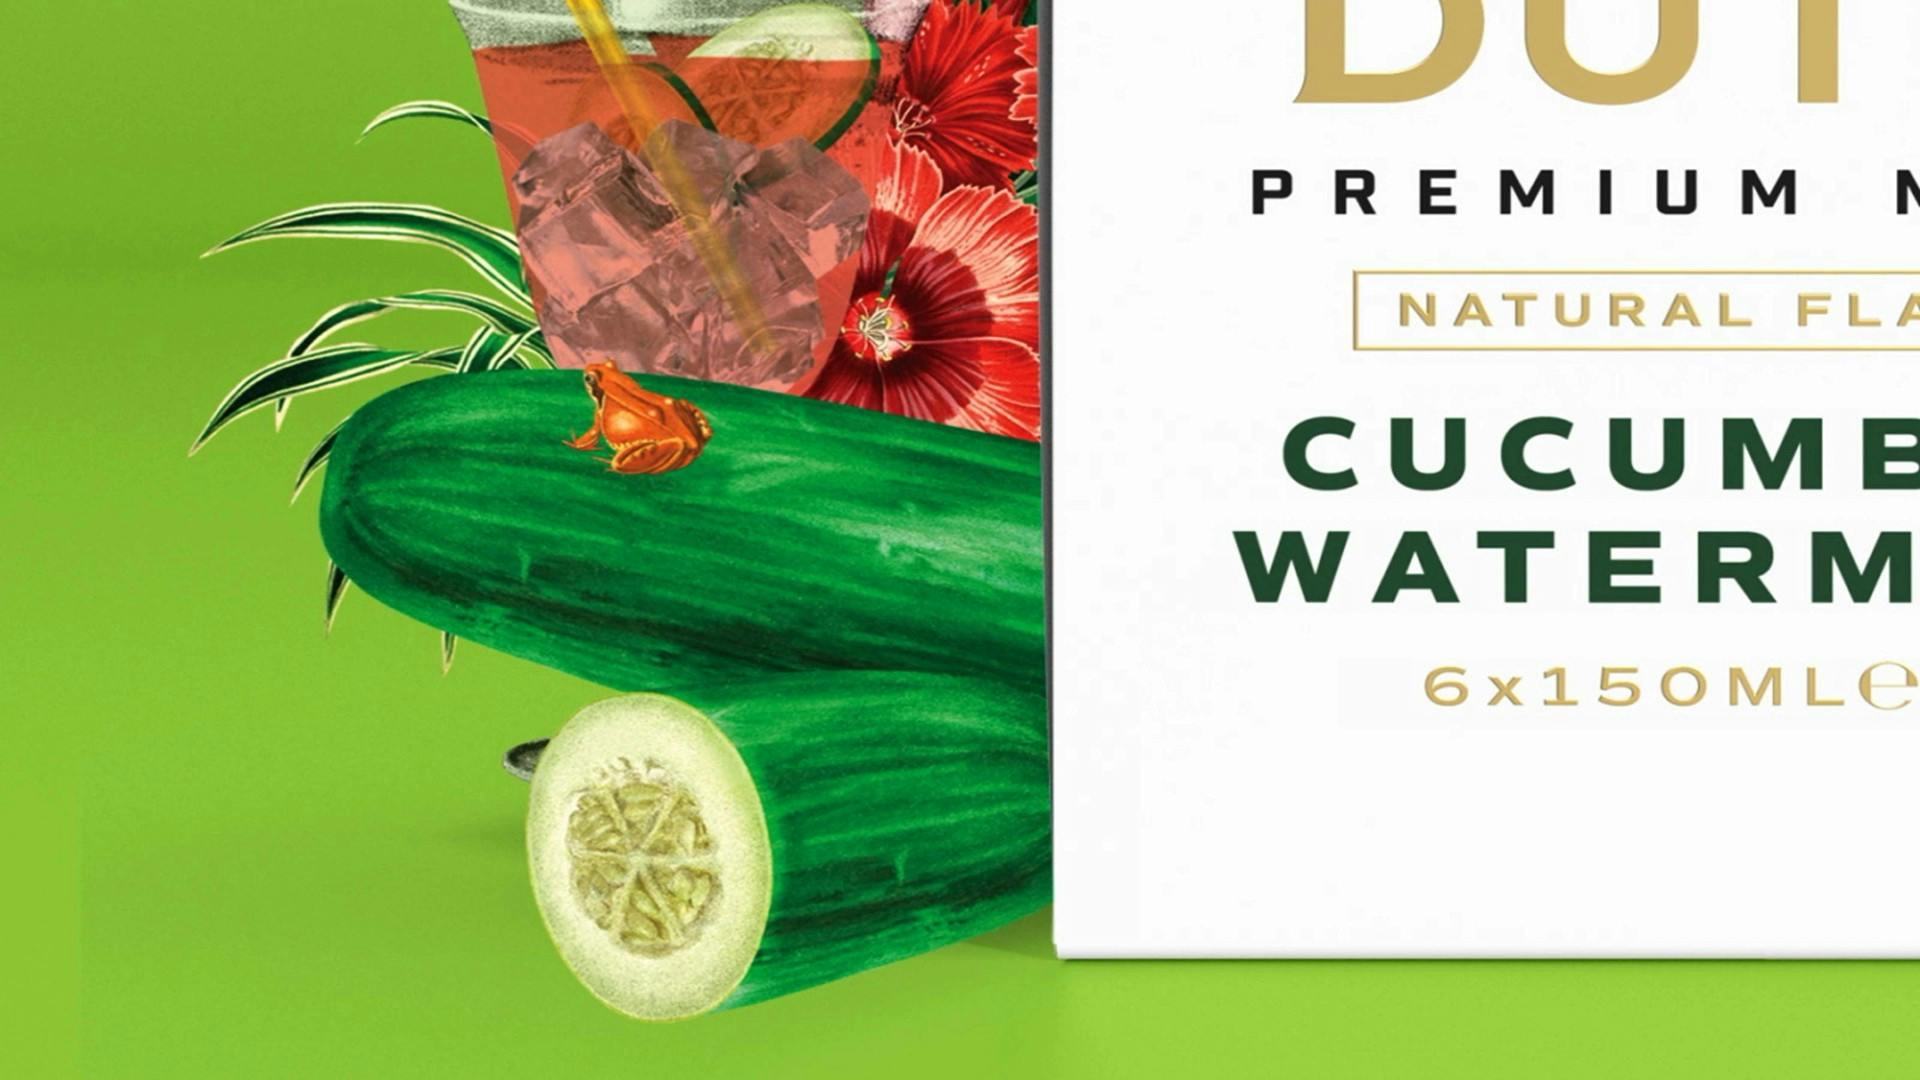 Double dutch Cucumber & Watermelon frame